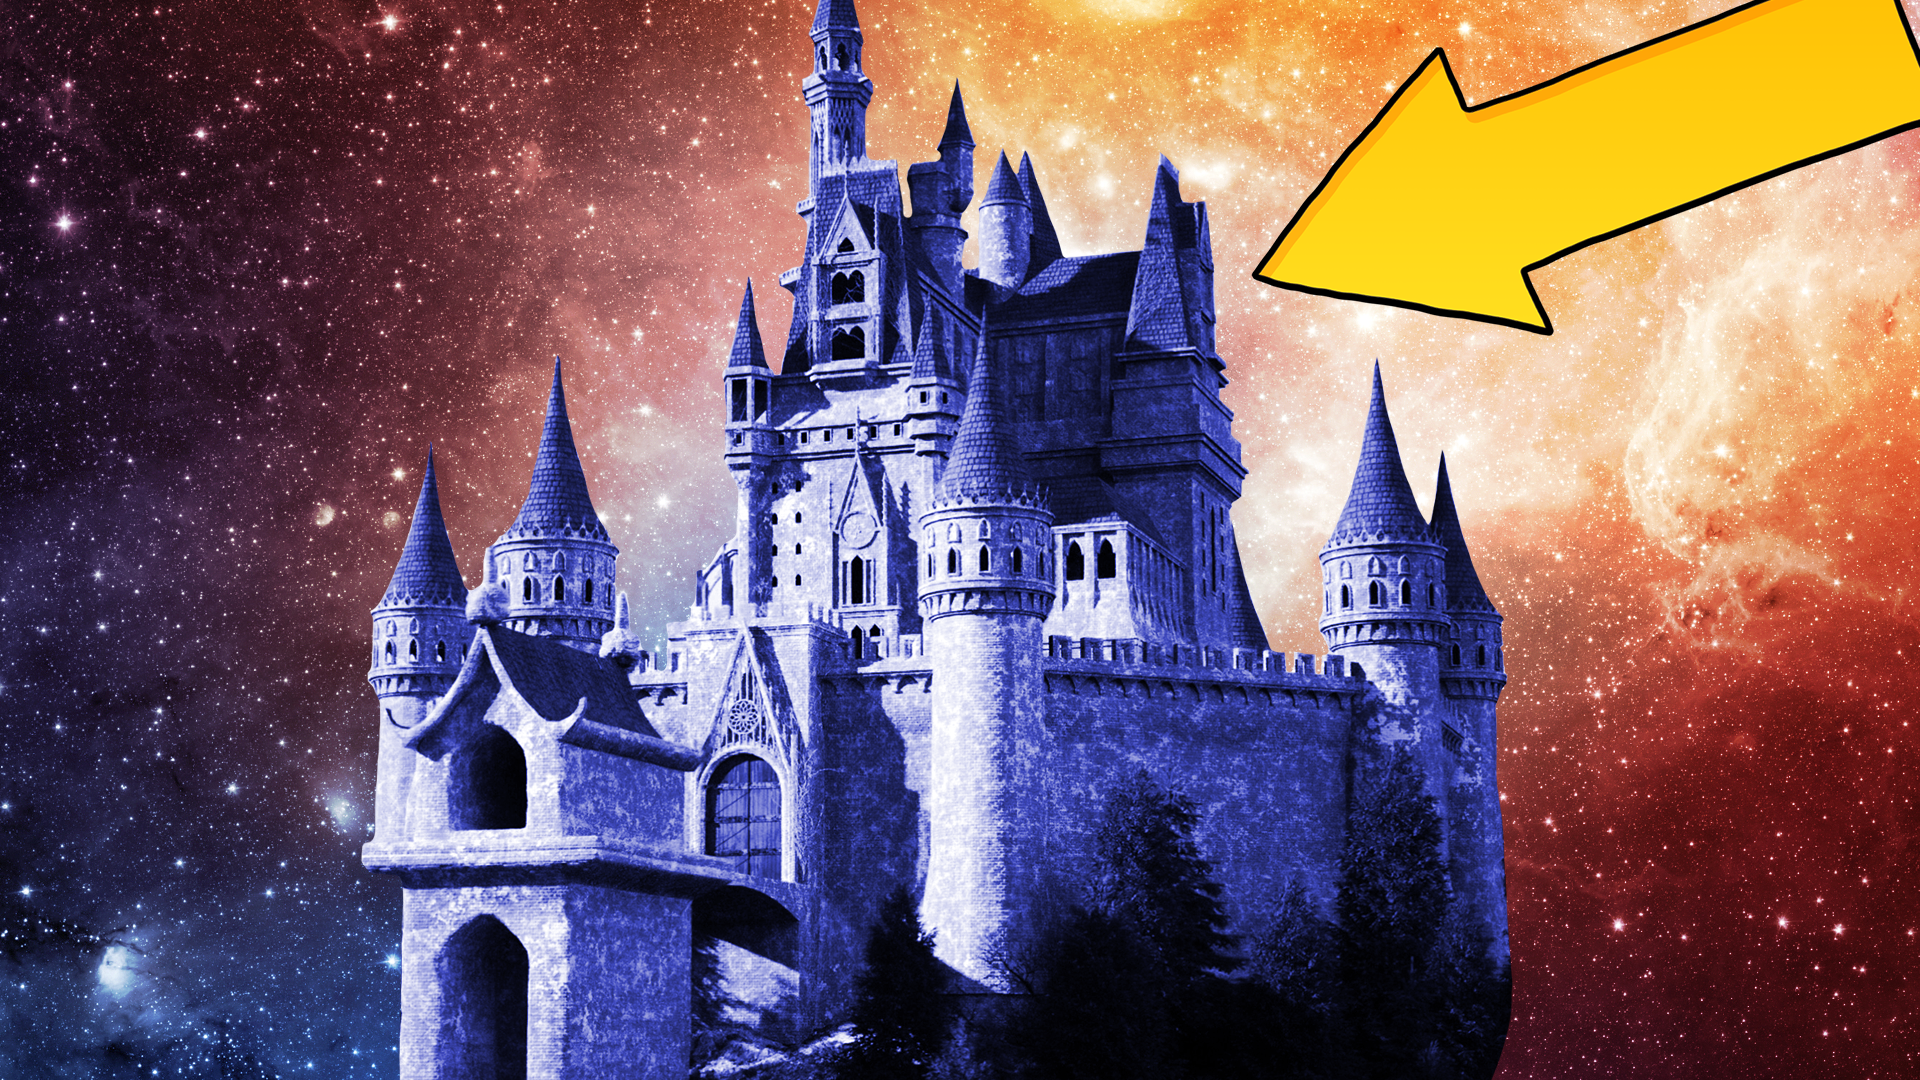 Disney castle with arrow